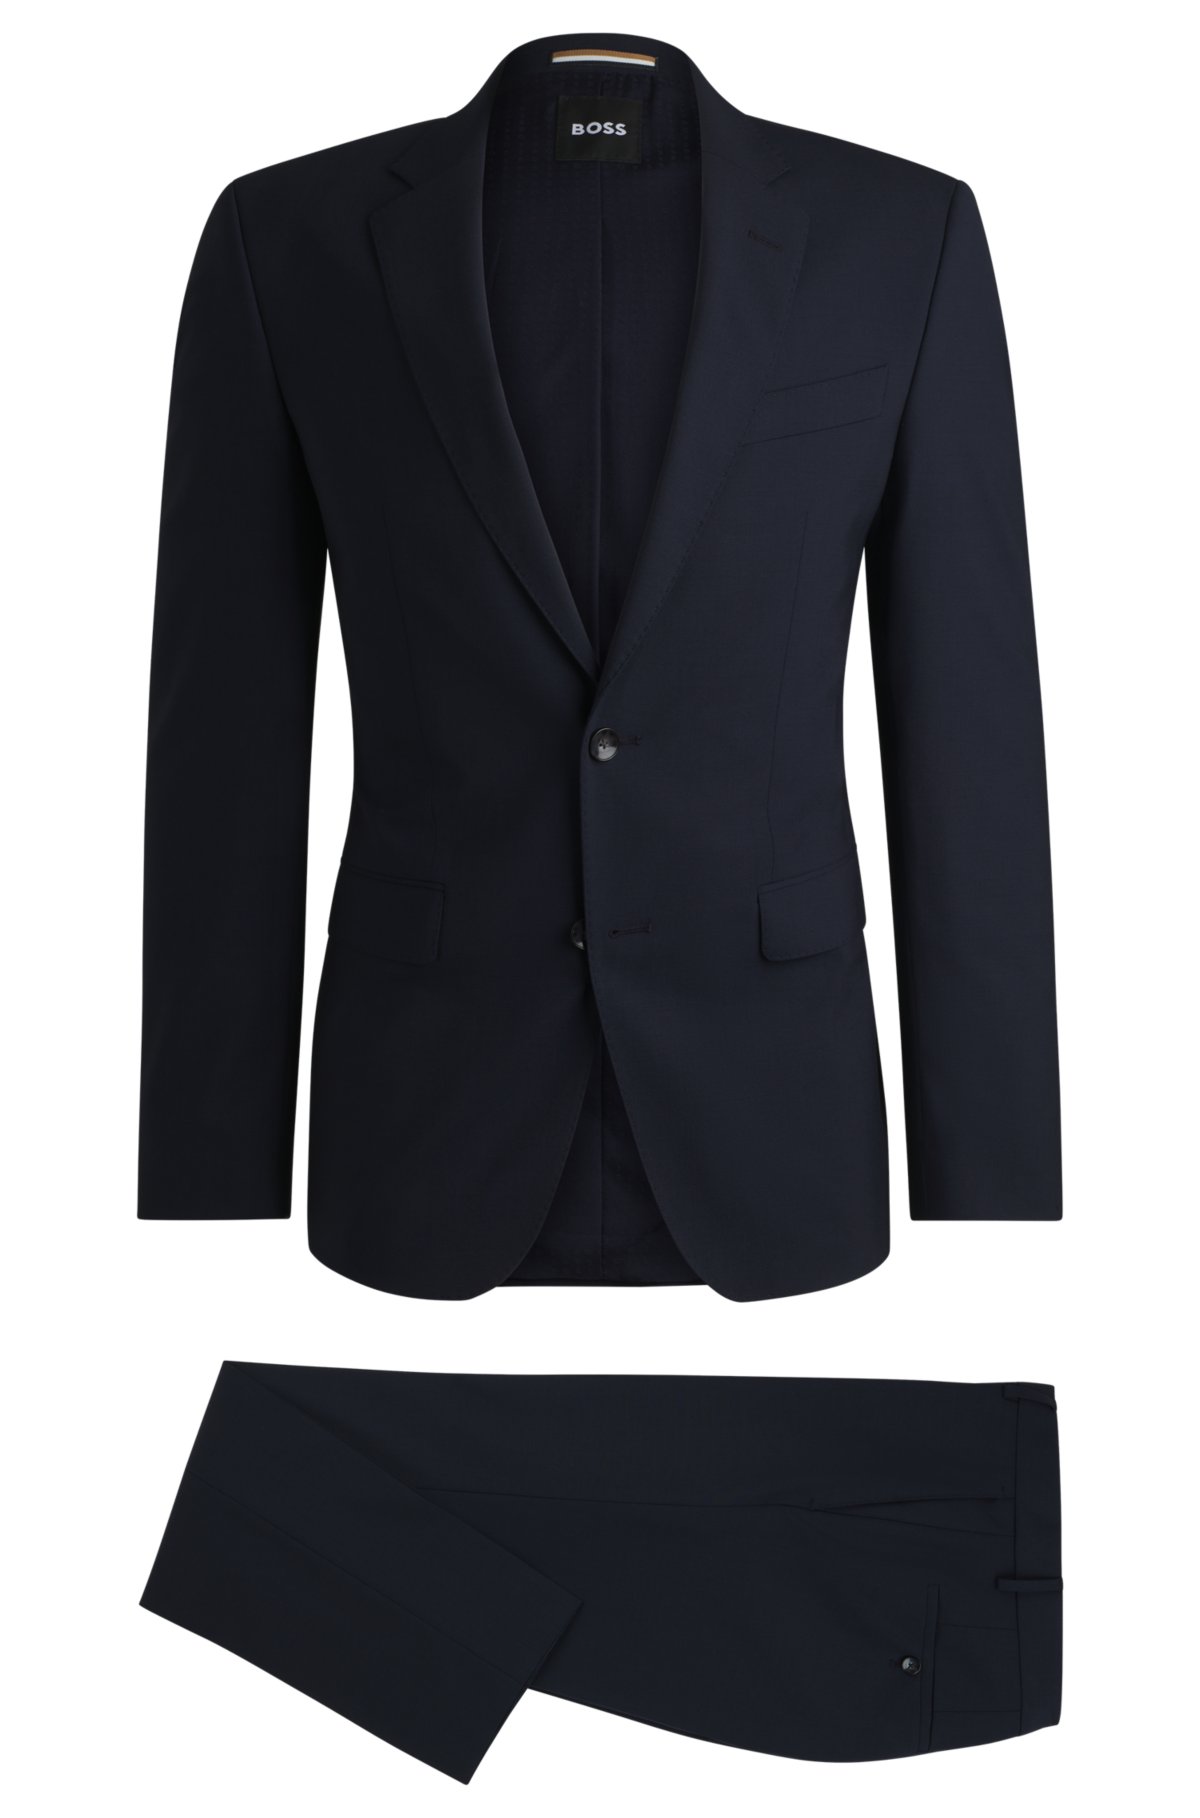 BOSS - Slim-fit suit in stretch virgin wool